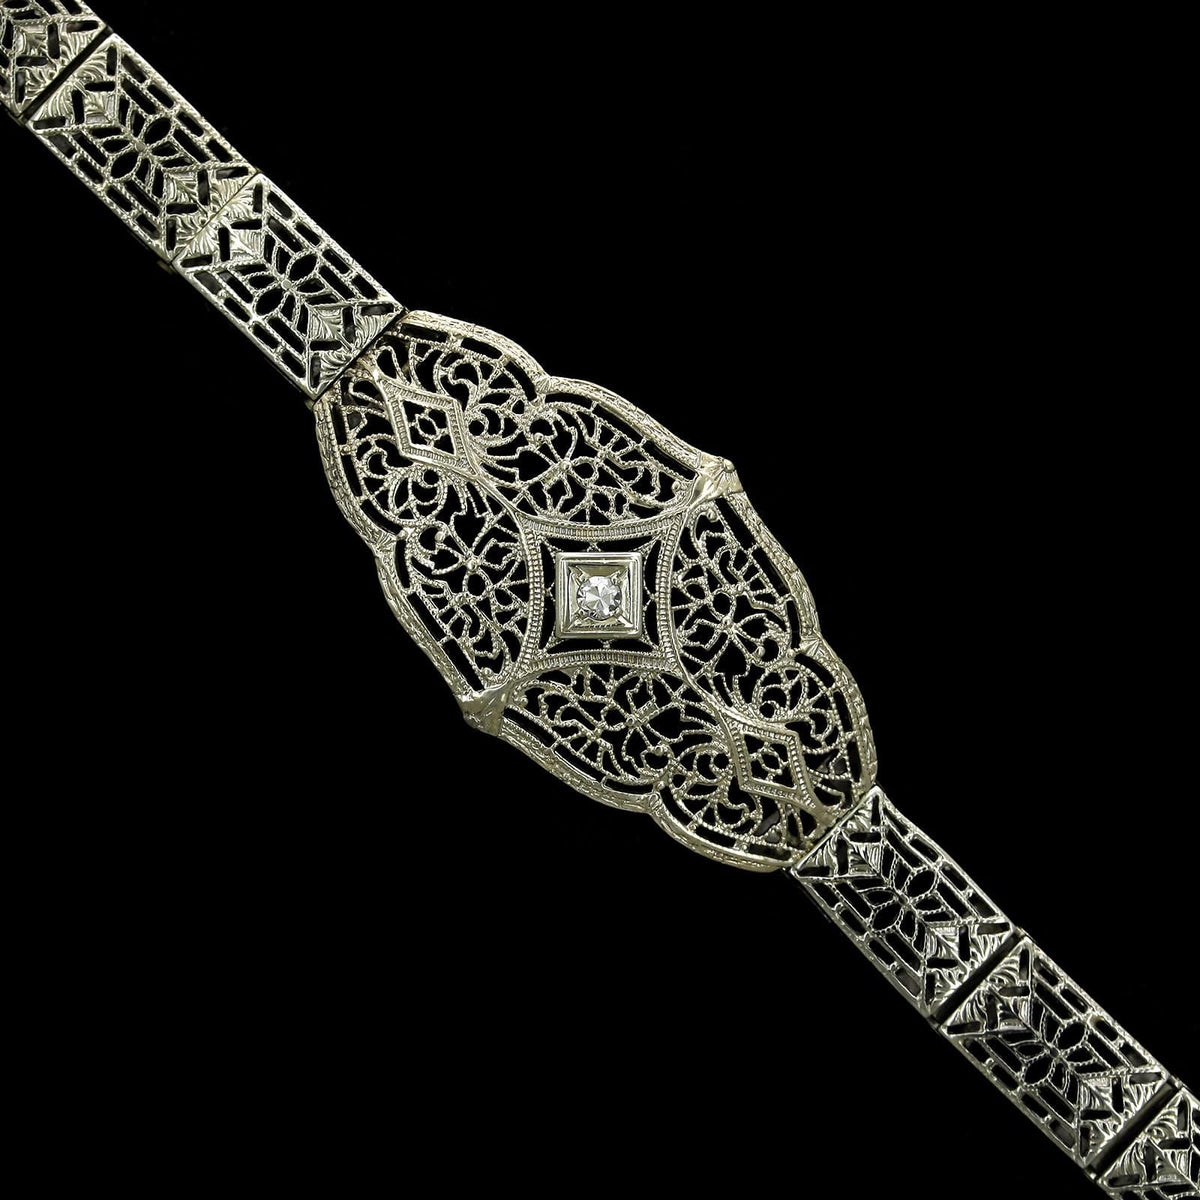 Vintage 14K White Gold Estate Diamond Bracelet